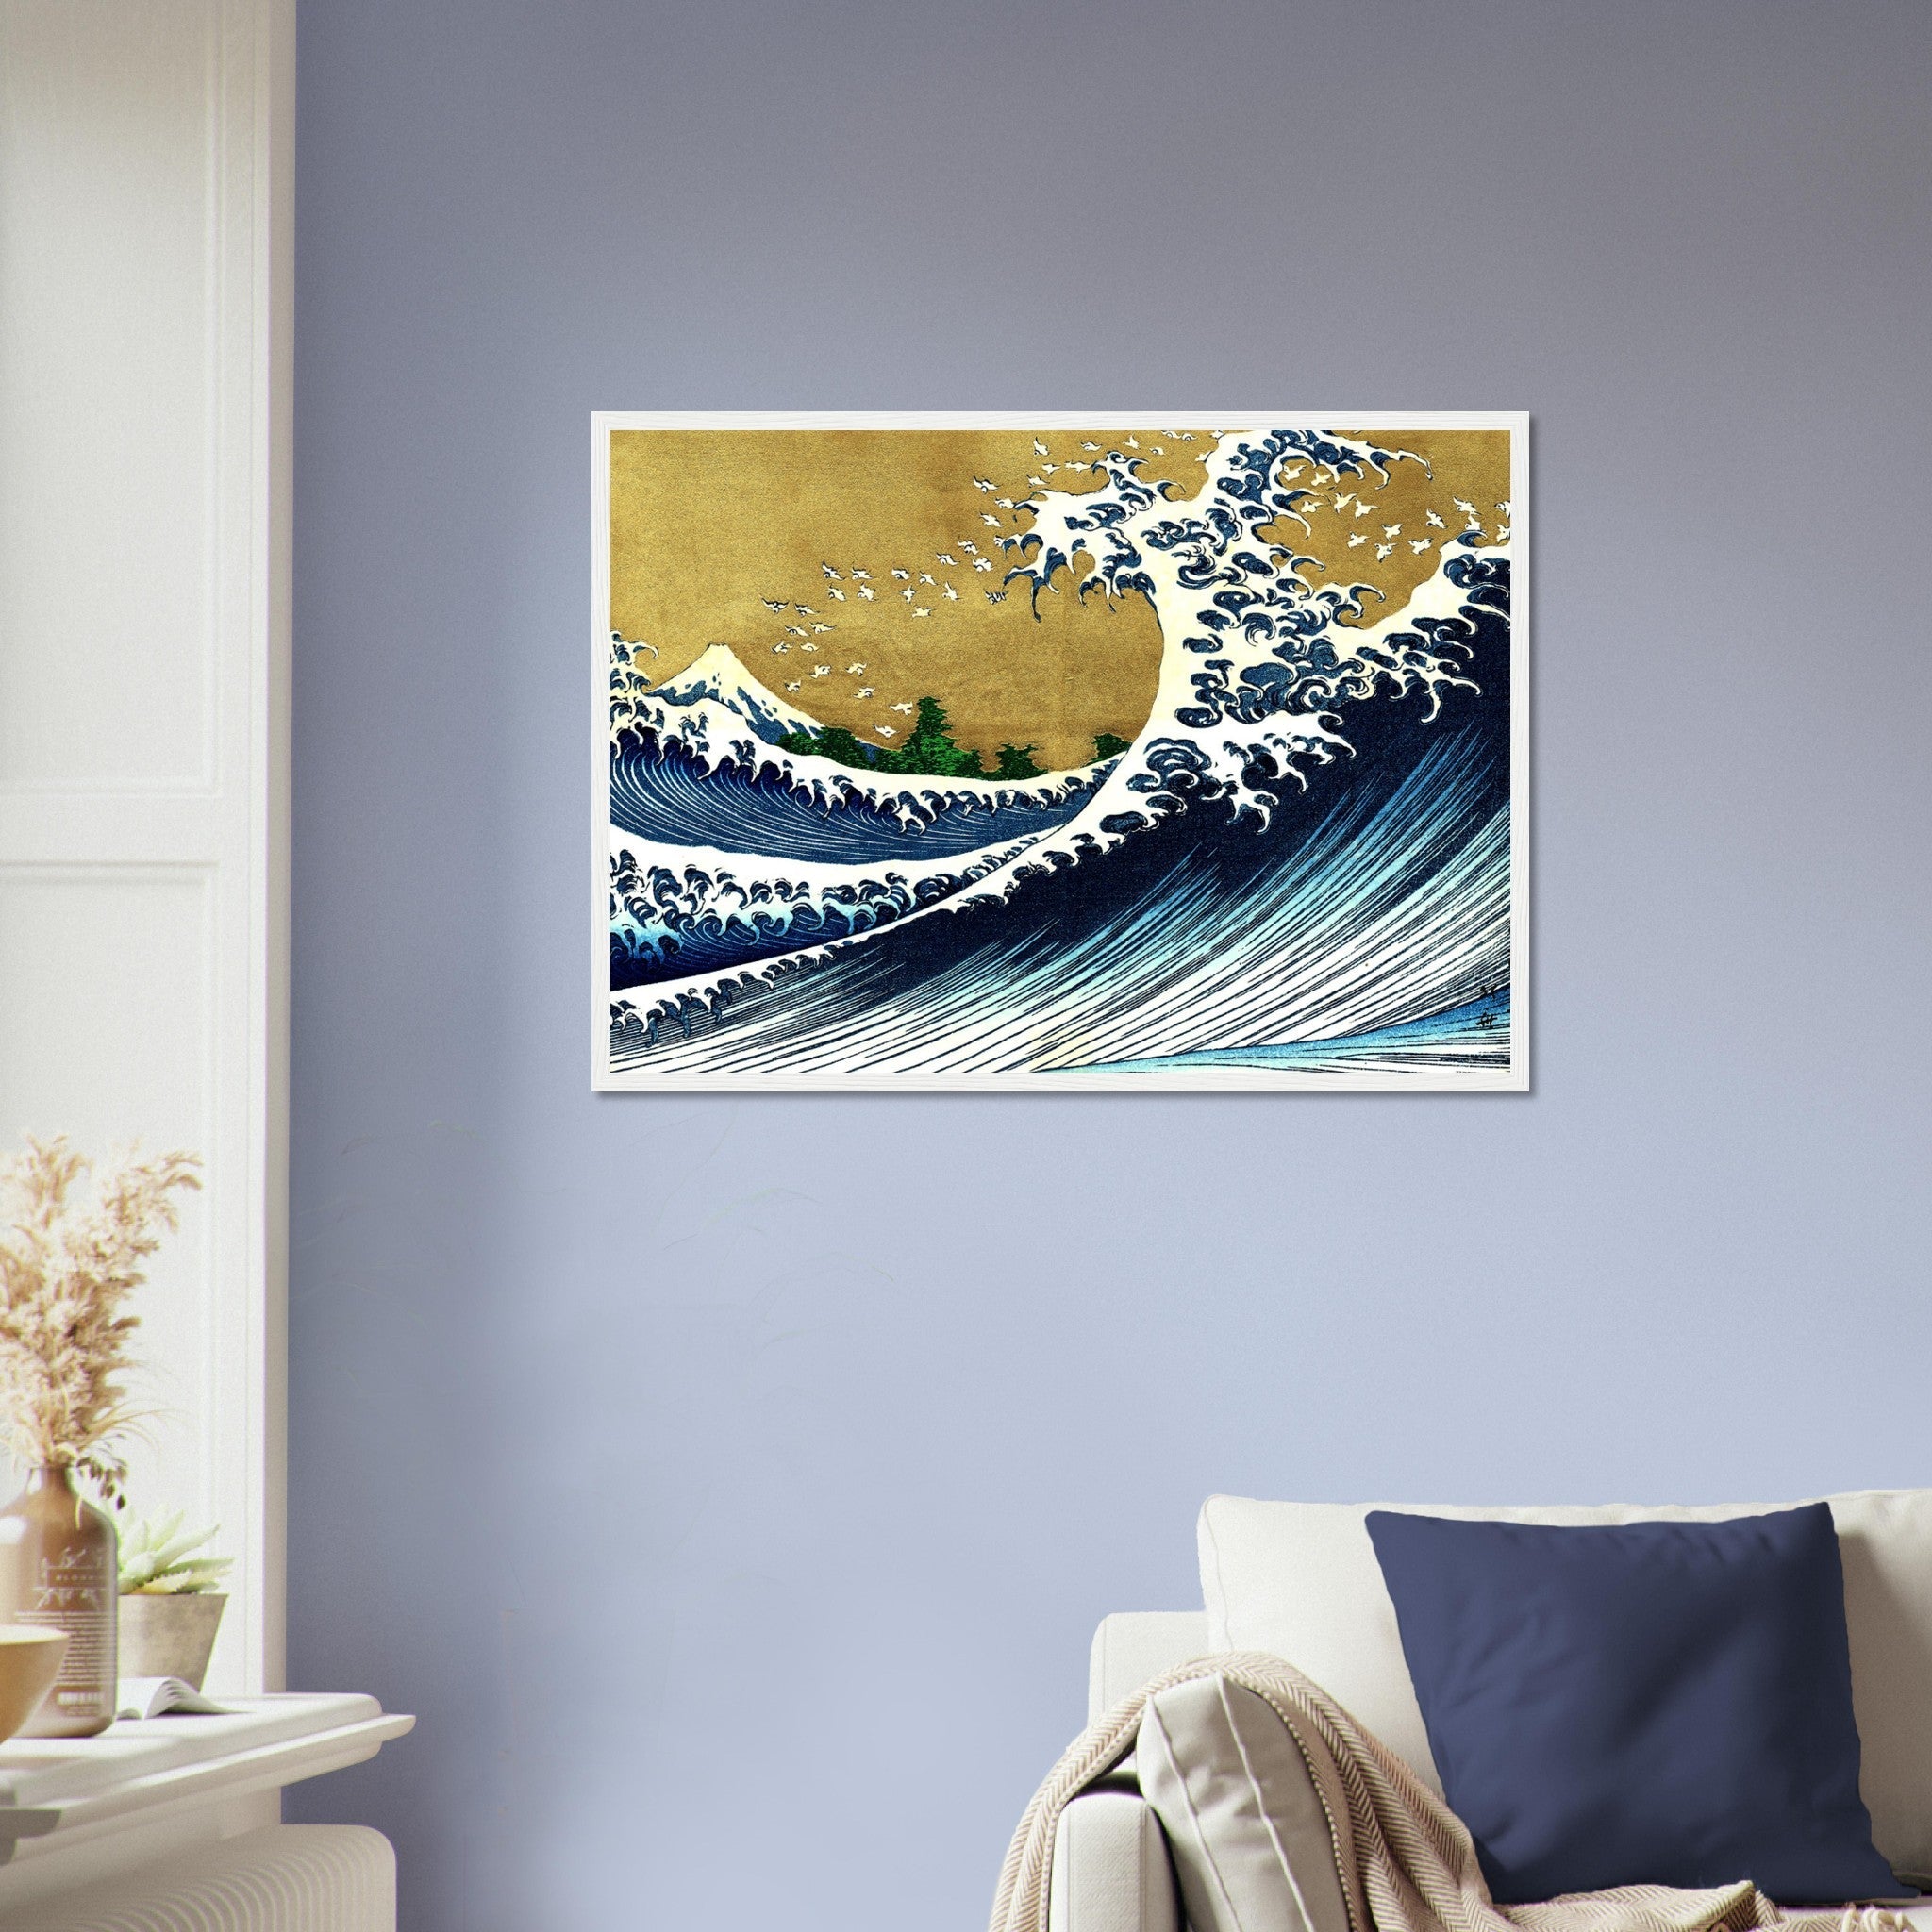 Big Wave Hokusai Framed Print , Katsushika Hokusai 1833 - Big Wave 100 Views Of Fuji Framed Print - WallArtPrints4U